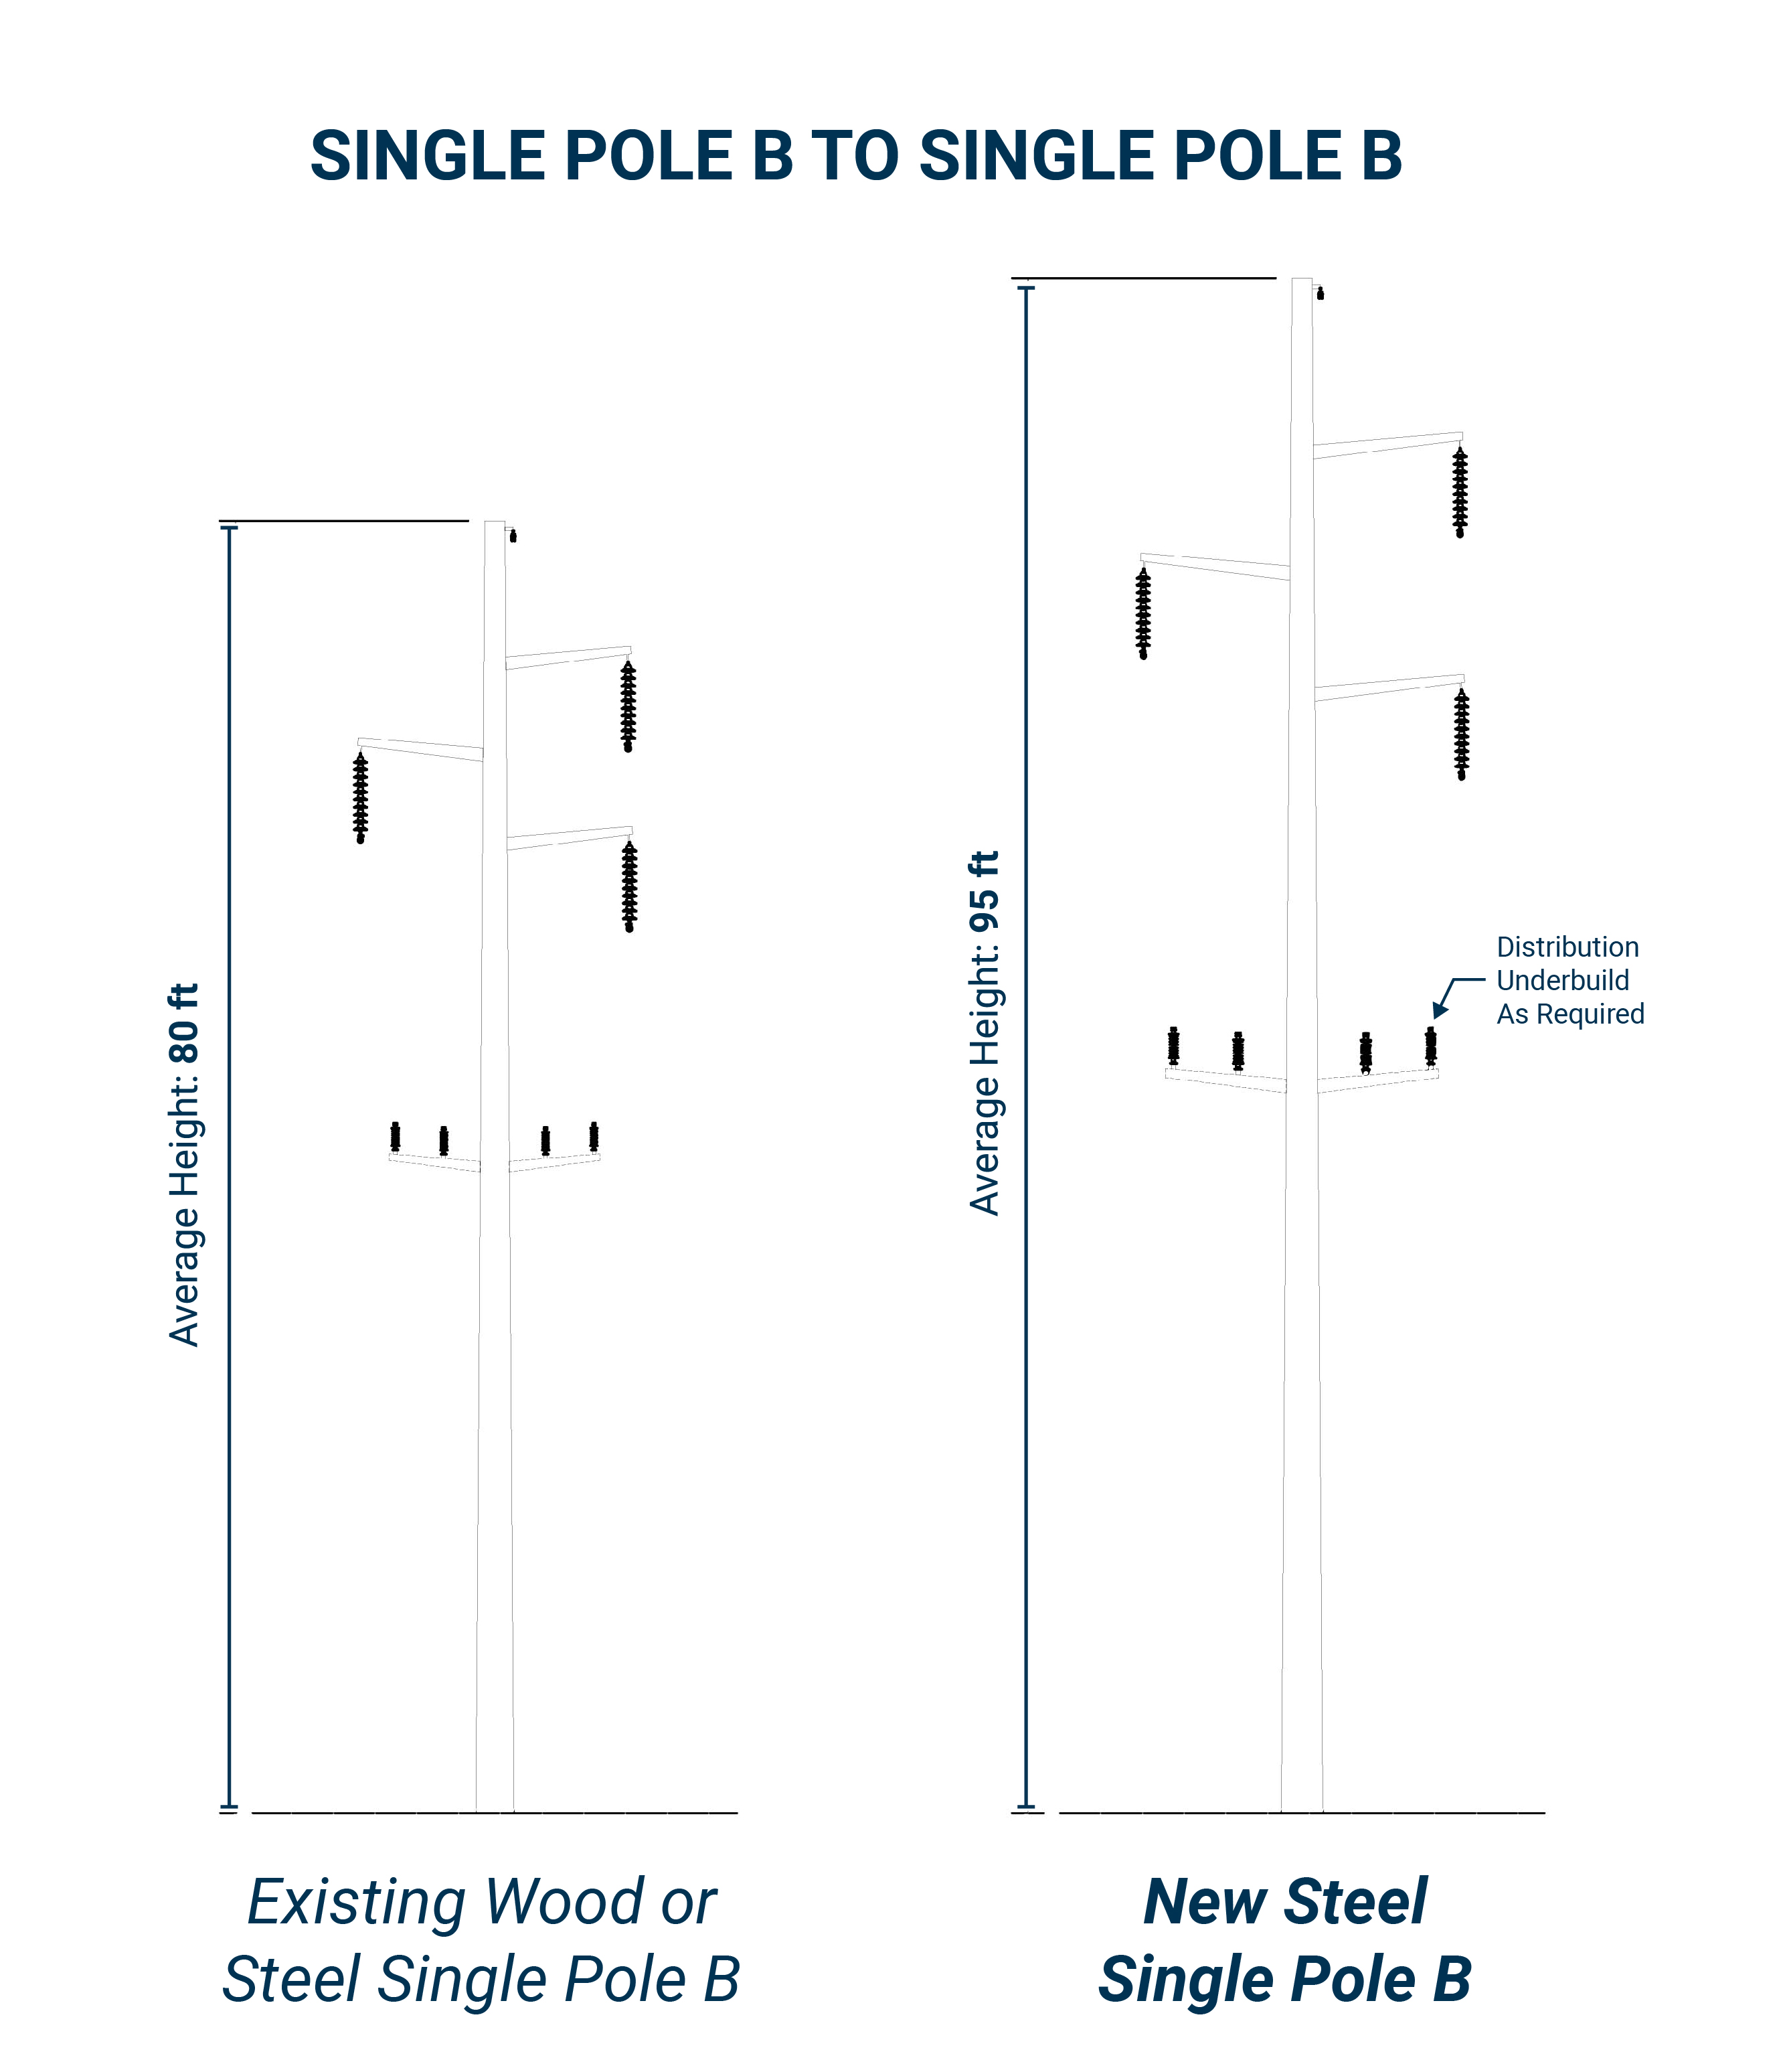 Diagram of current single pole B to new steel single pole B